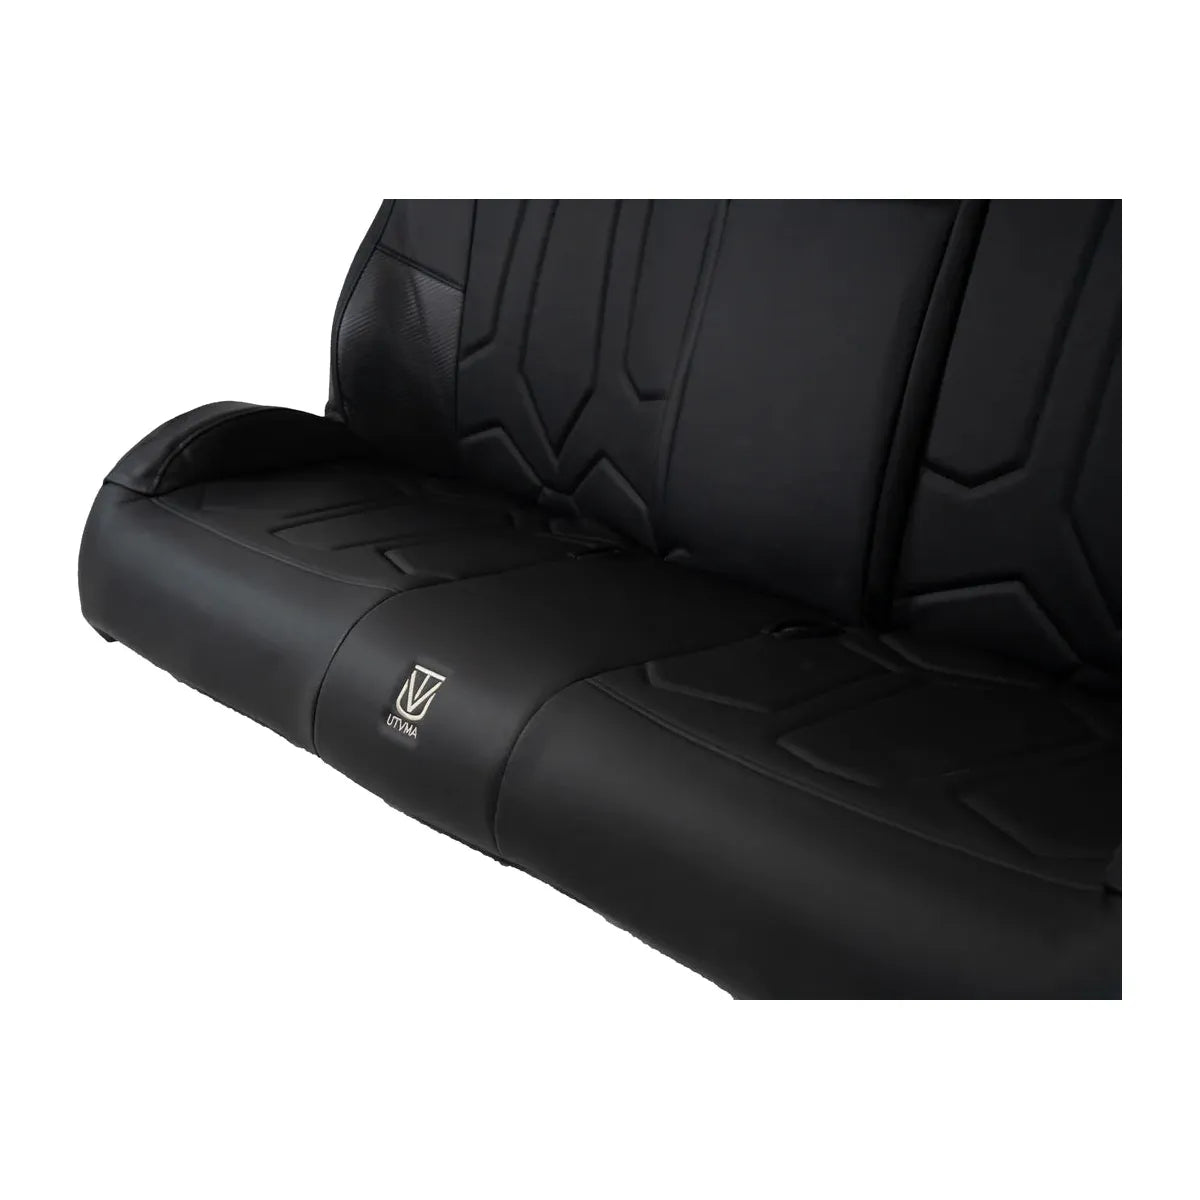 Polaris General 1000 Rear Bench Seat W Harnesses (2017-2024)